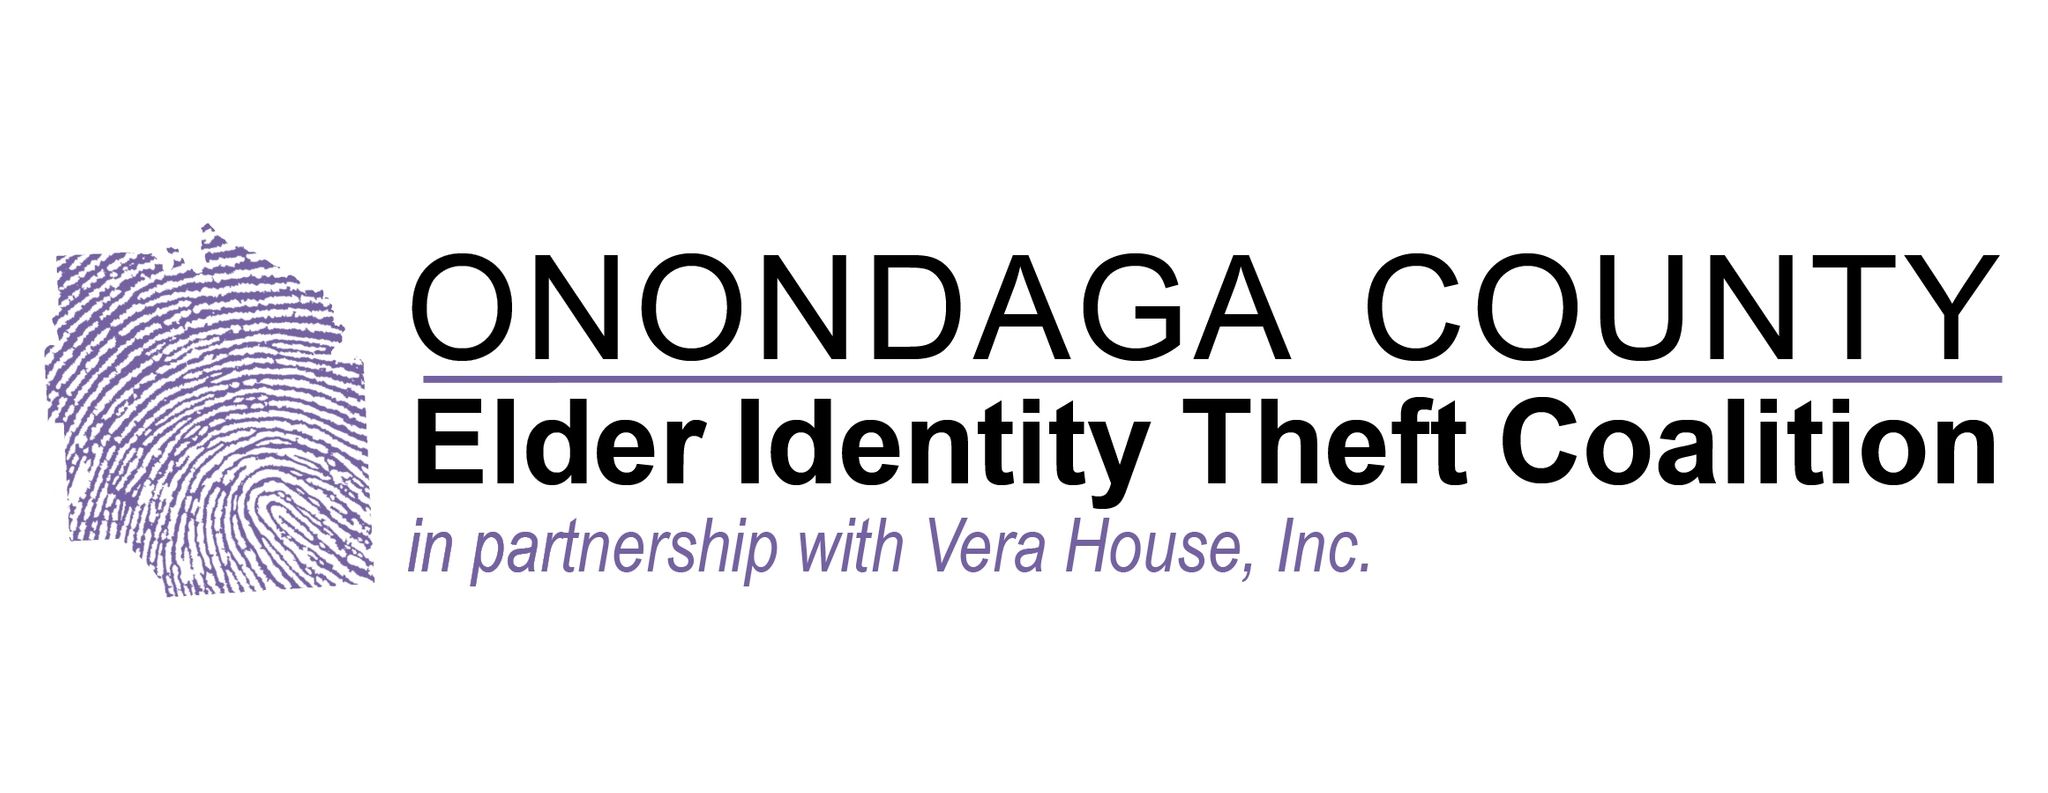 Onondaga County Elder Identity Theft Coalition Logo